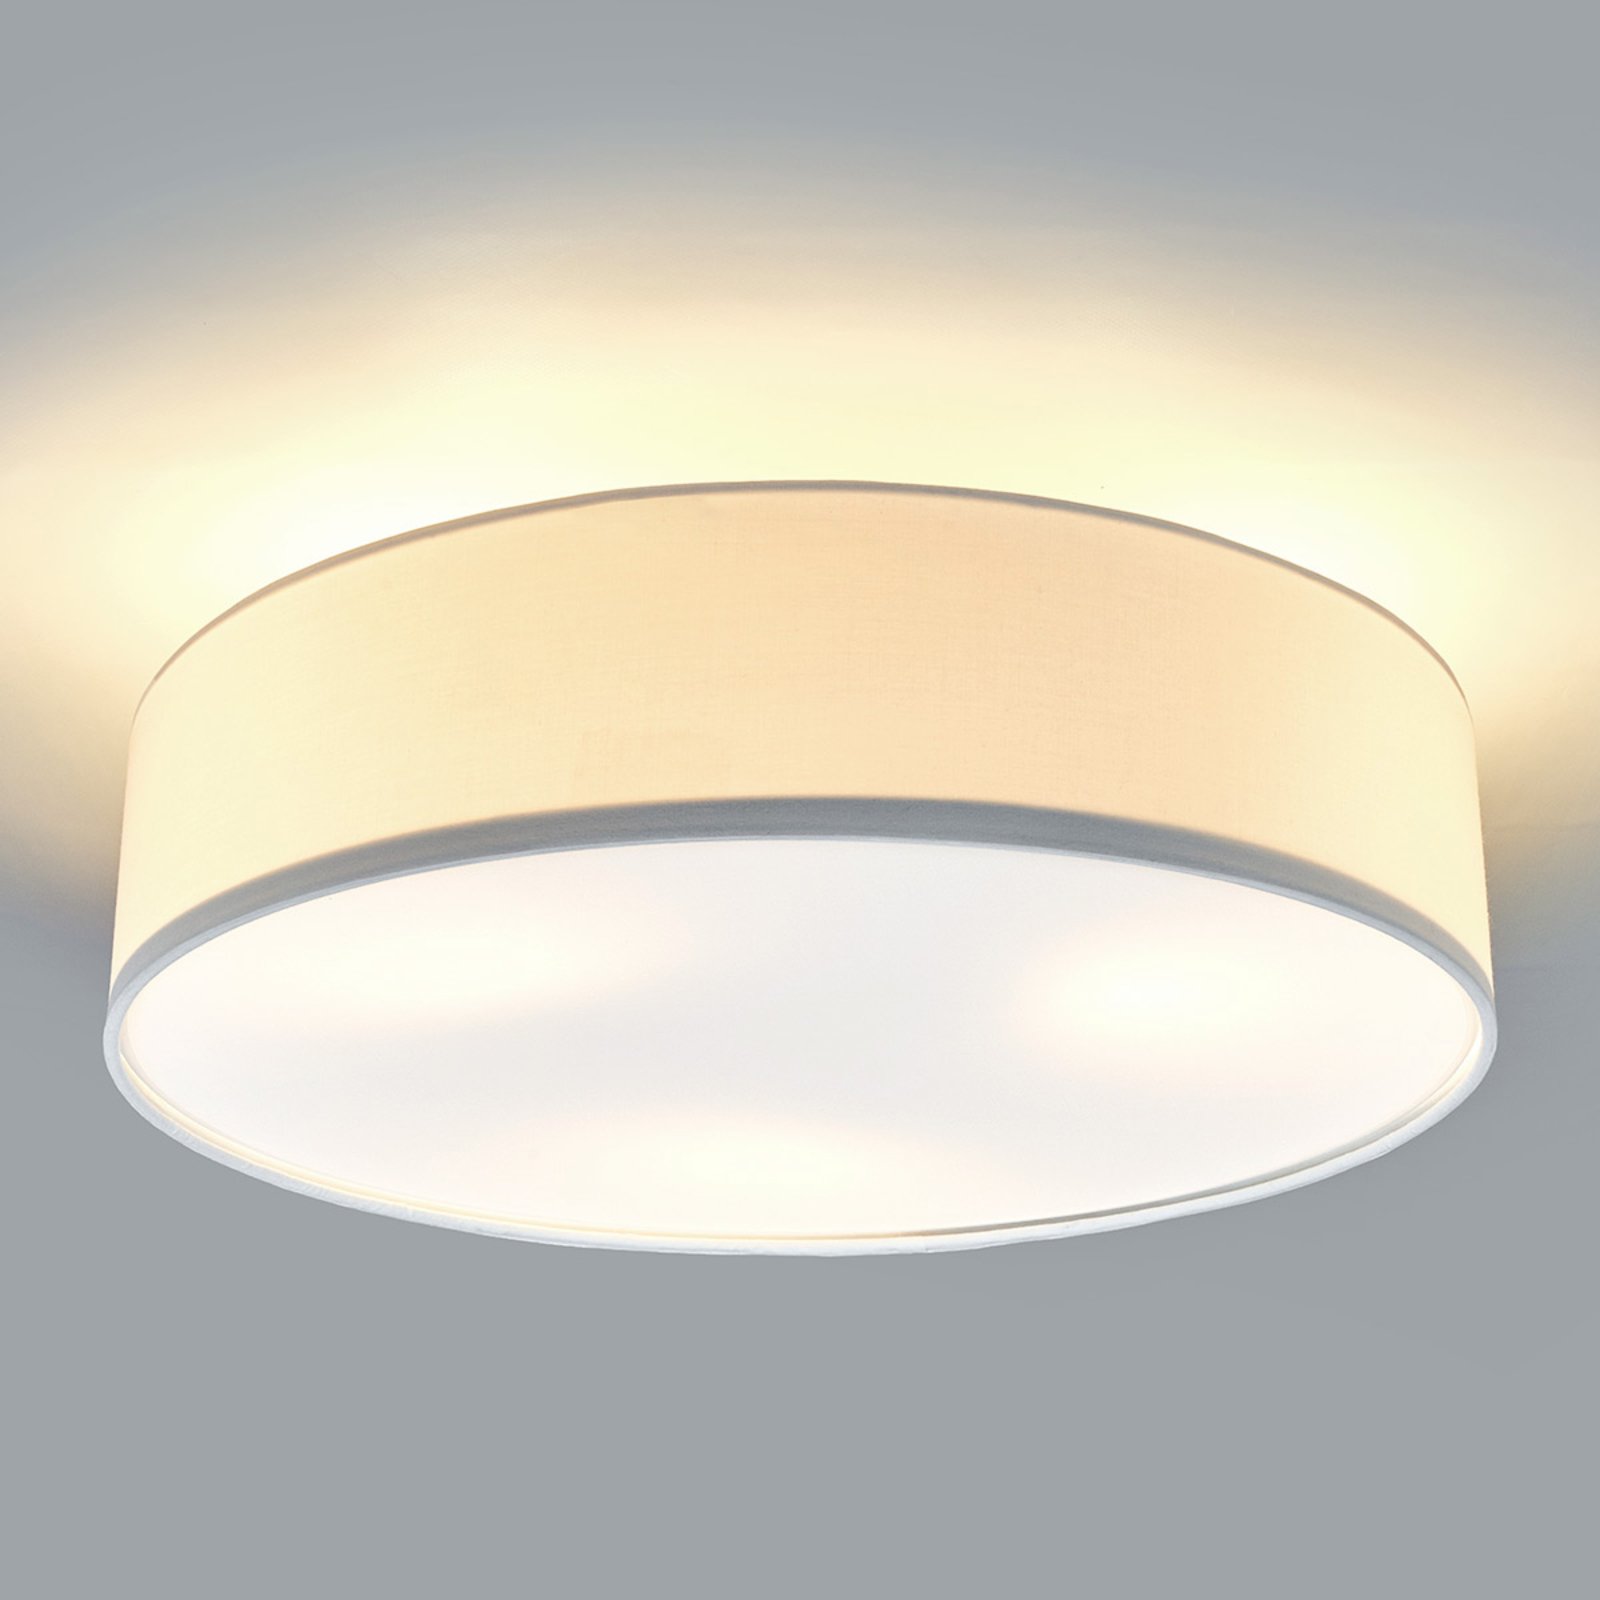 Sebatin ceiling light, E27, 50 cm, cream